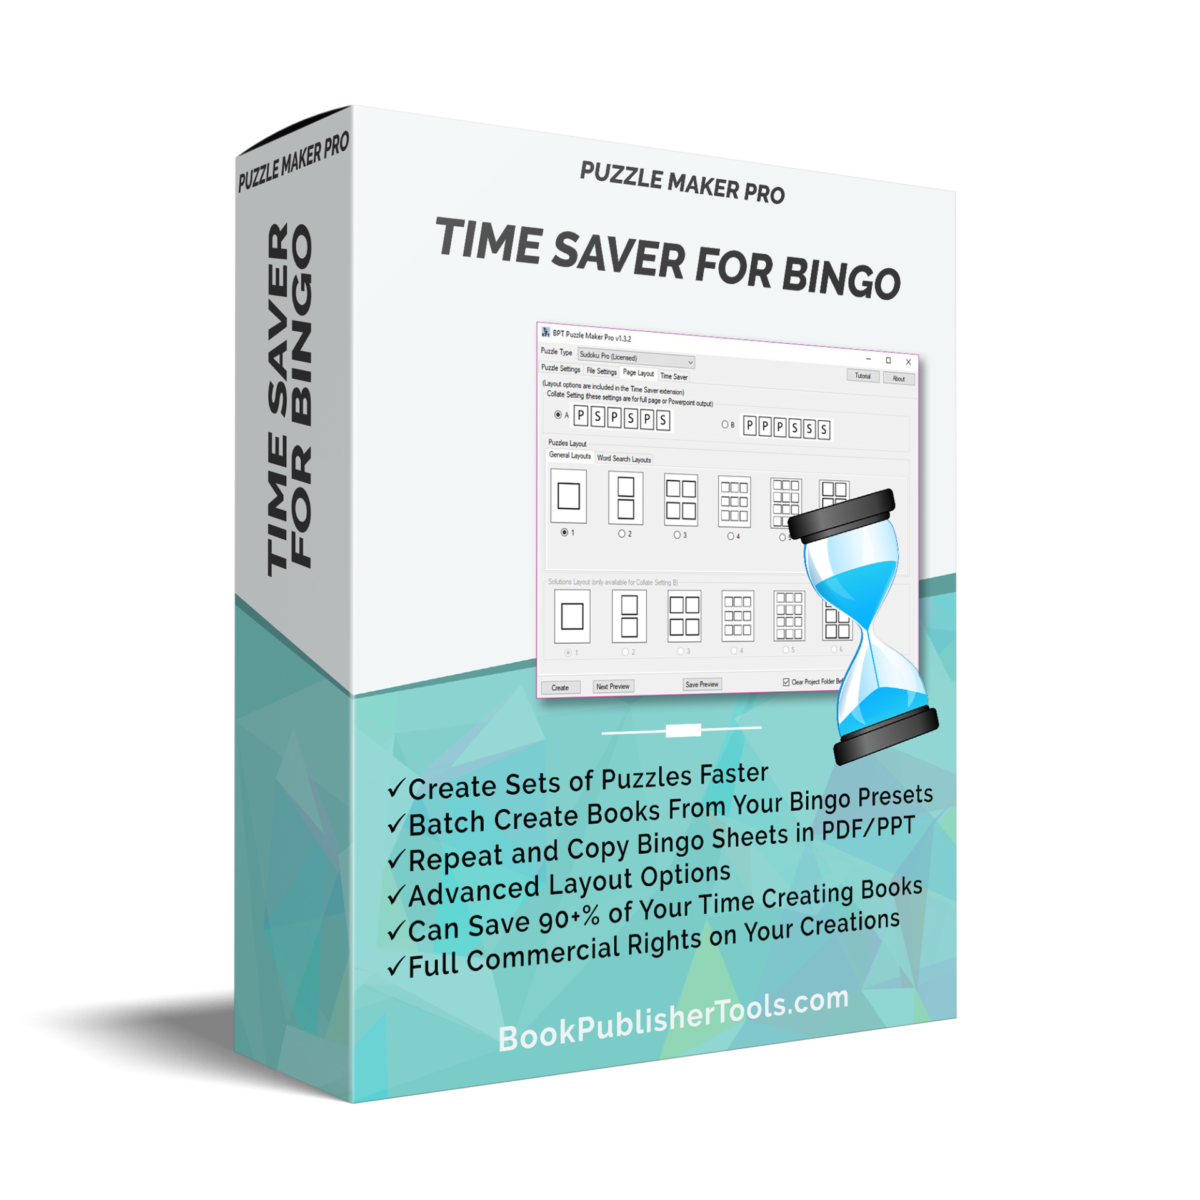 Time Saver for Bingo software box